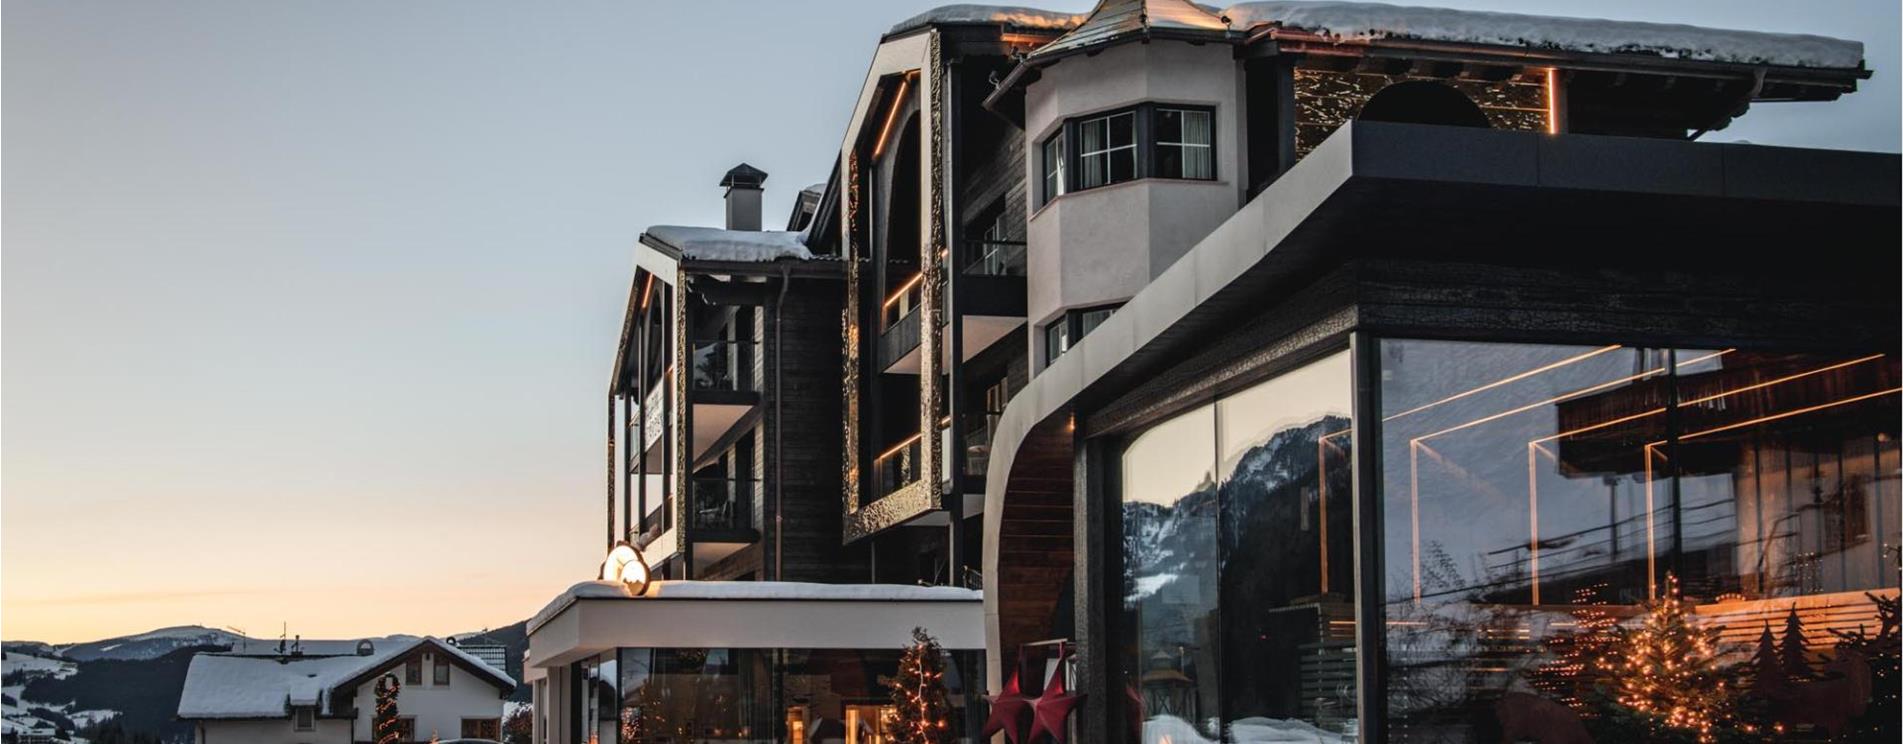 Alpin Garden 5 Star Hotel with SPA in Val Gardena